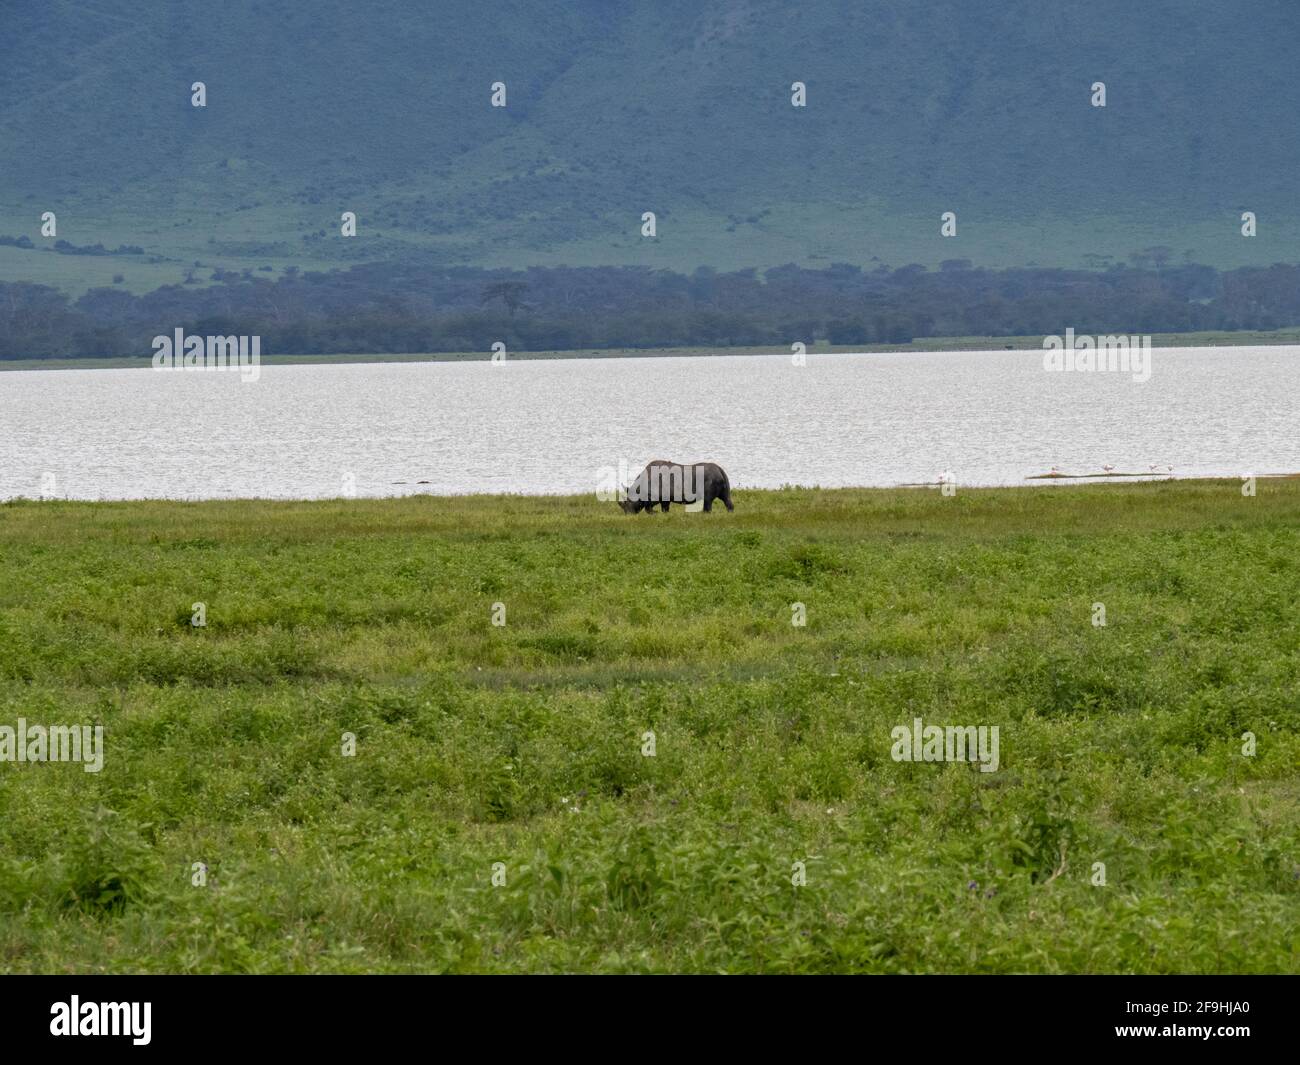 Ngorongoro Crater, Tanzania, Africa - March 1, 2020: Black Rhino grazing along the savannah Stock Photo